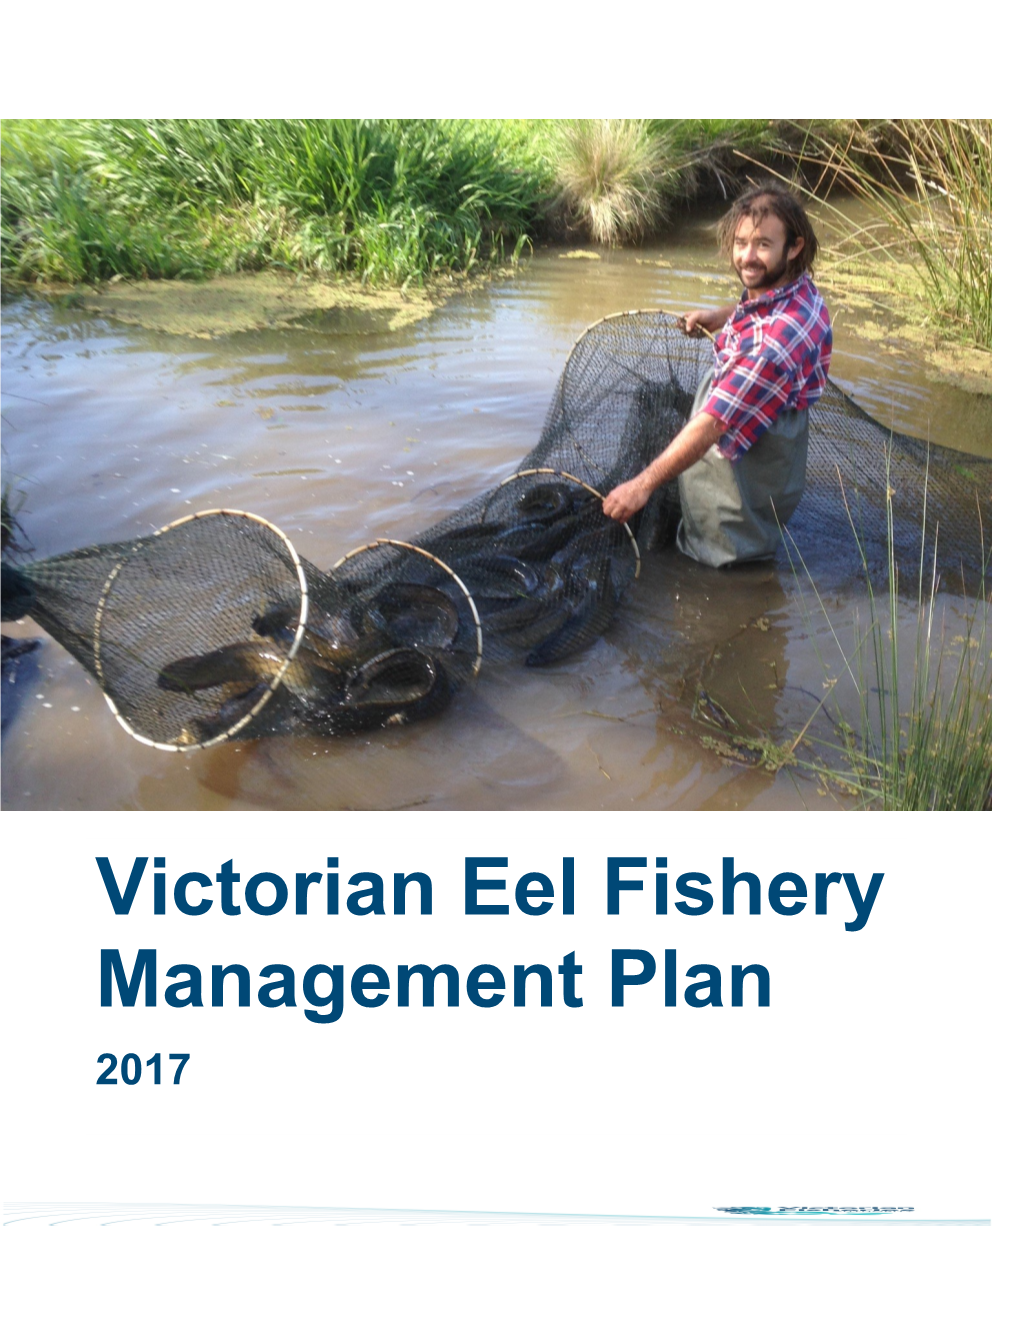 Draft Victorian Eel Fishery Management Plan